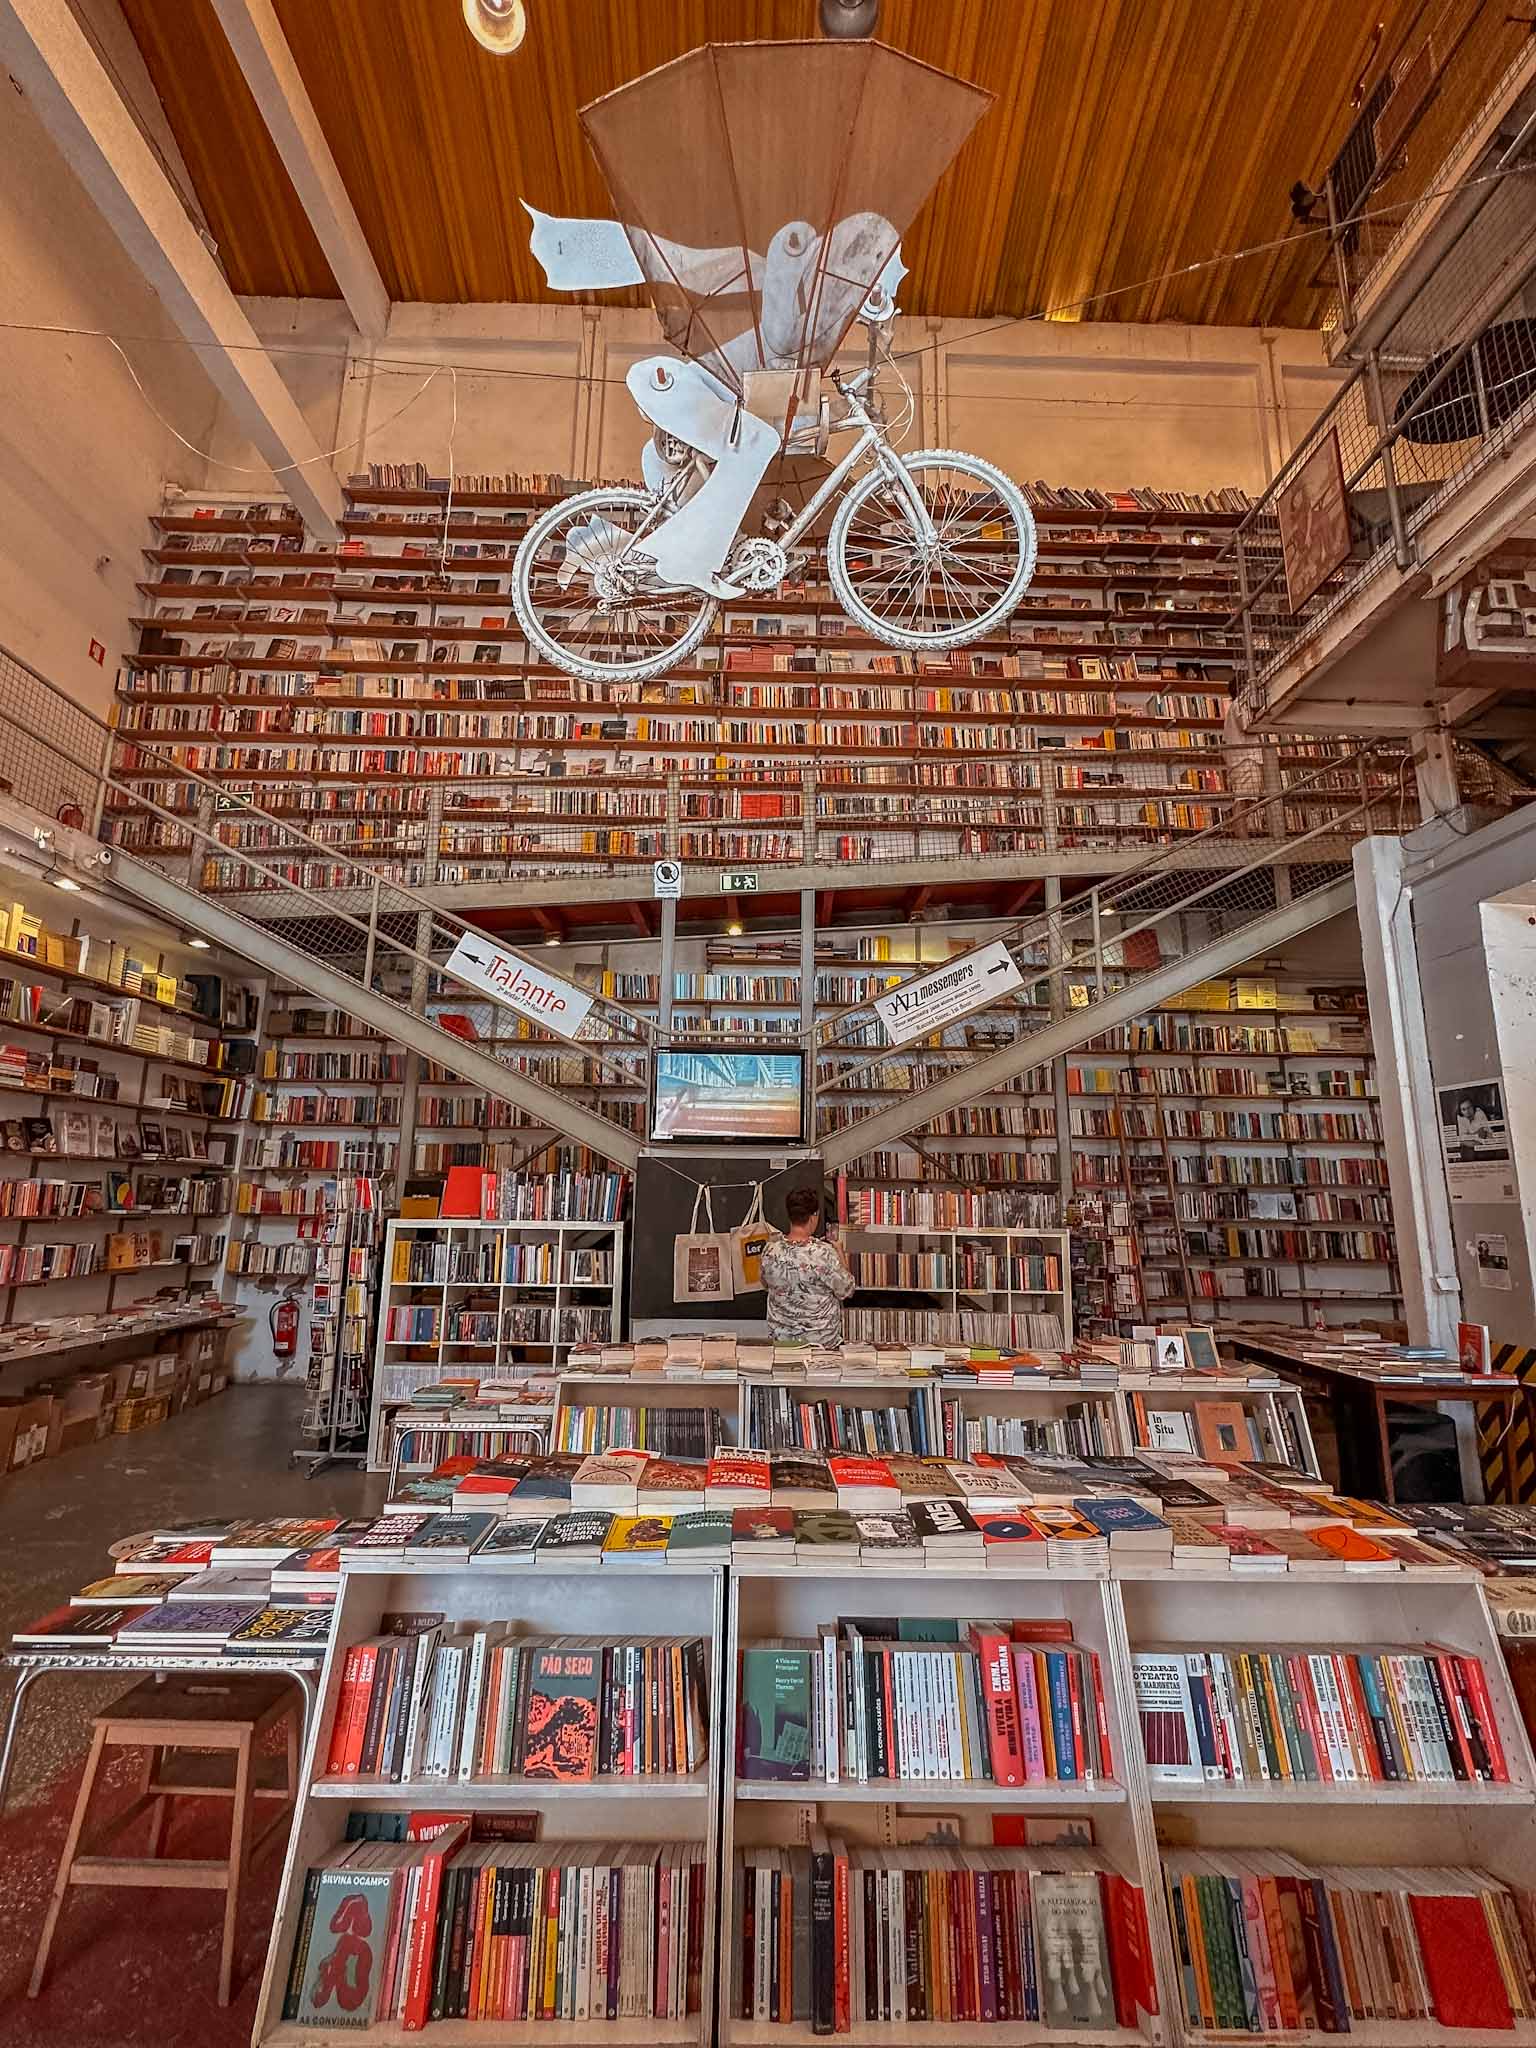 Best Instagram photo spots in Lisbon, Portugal - Ler Devagar bookstore in LX Factory